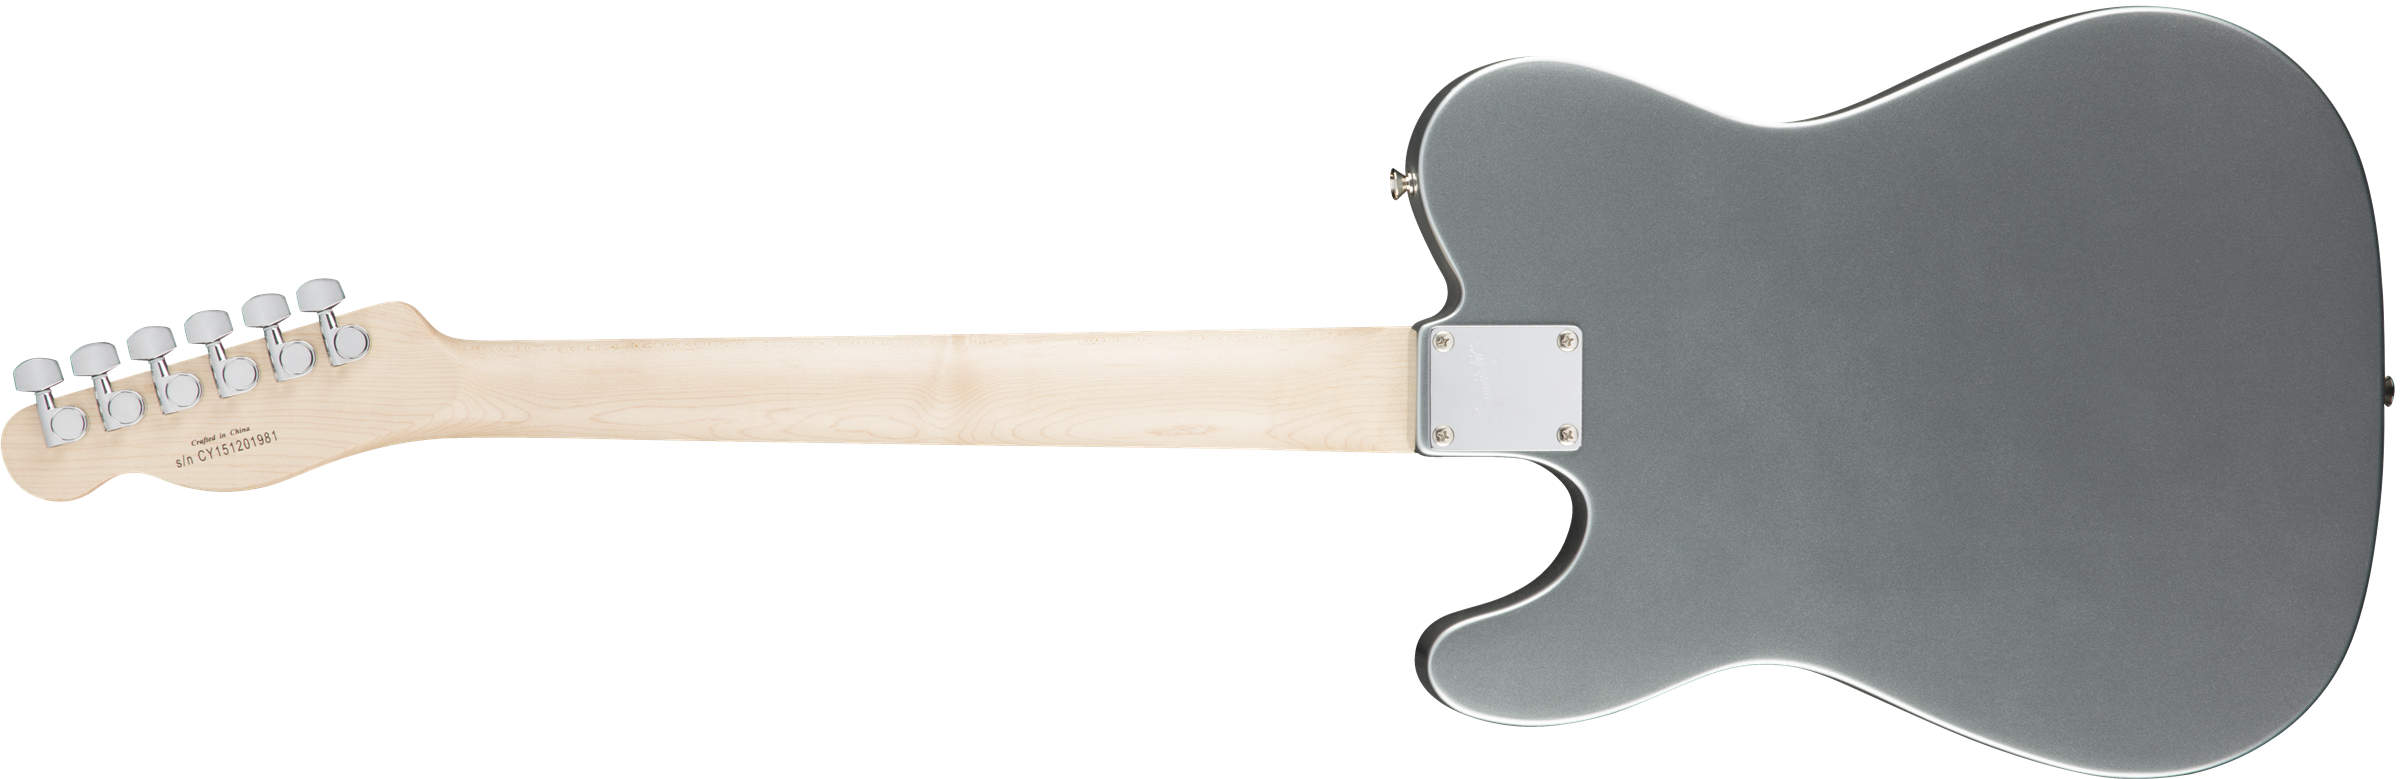 Squier Tele Affinity Series 2019 Lau - Slick Silver - Tel shape electric guitar - Variation 5